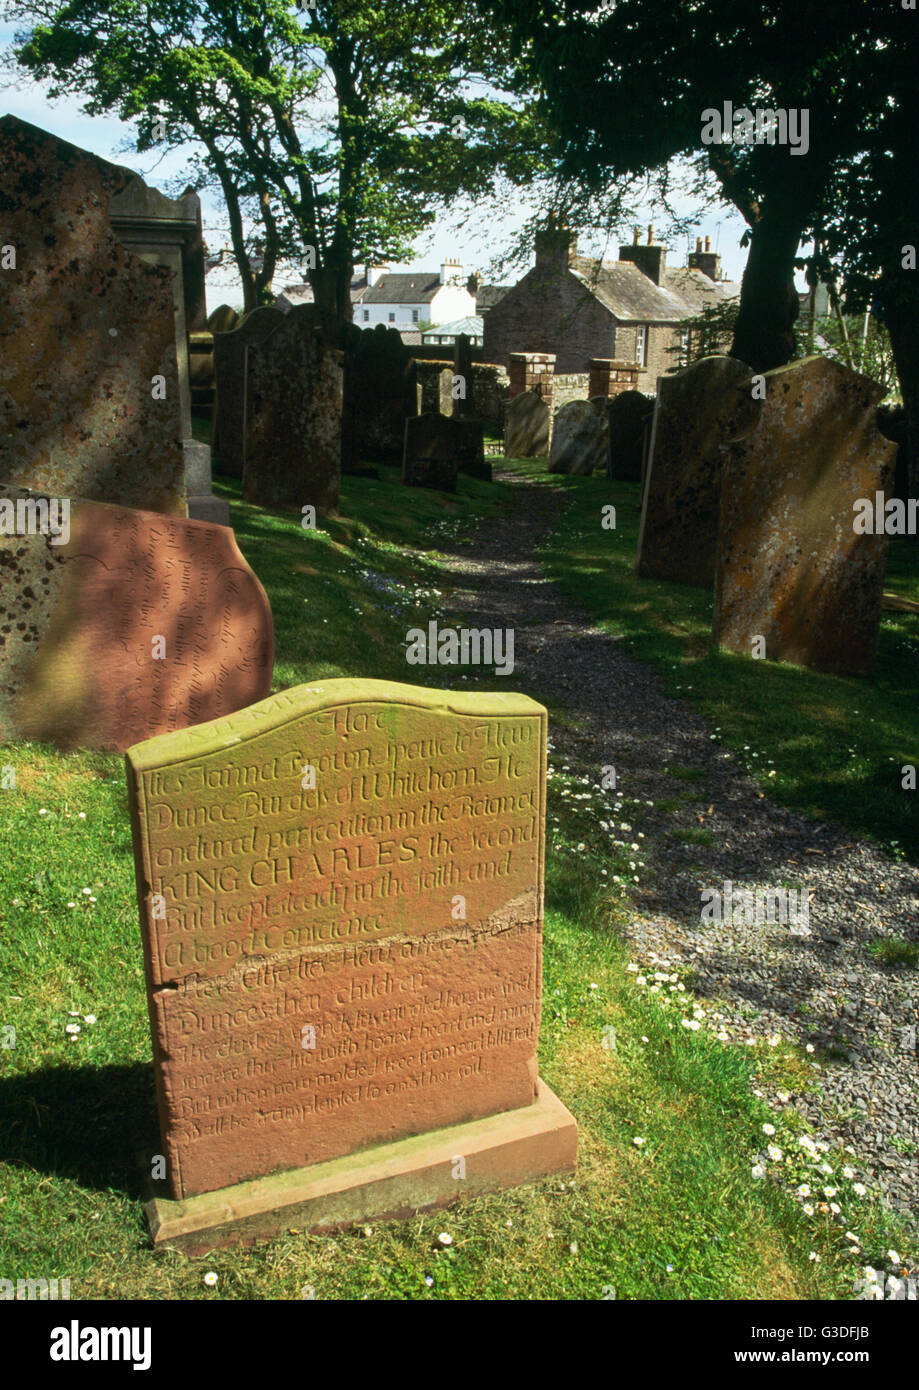 Grabstein in Fund Kathedrale-Priorat Friedhof, Covenanter Hew Dunce. Stockfoto